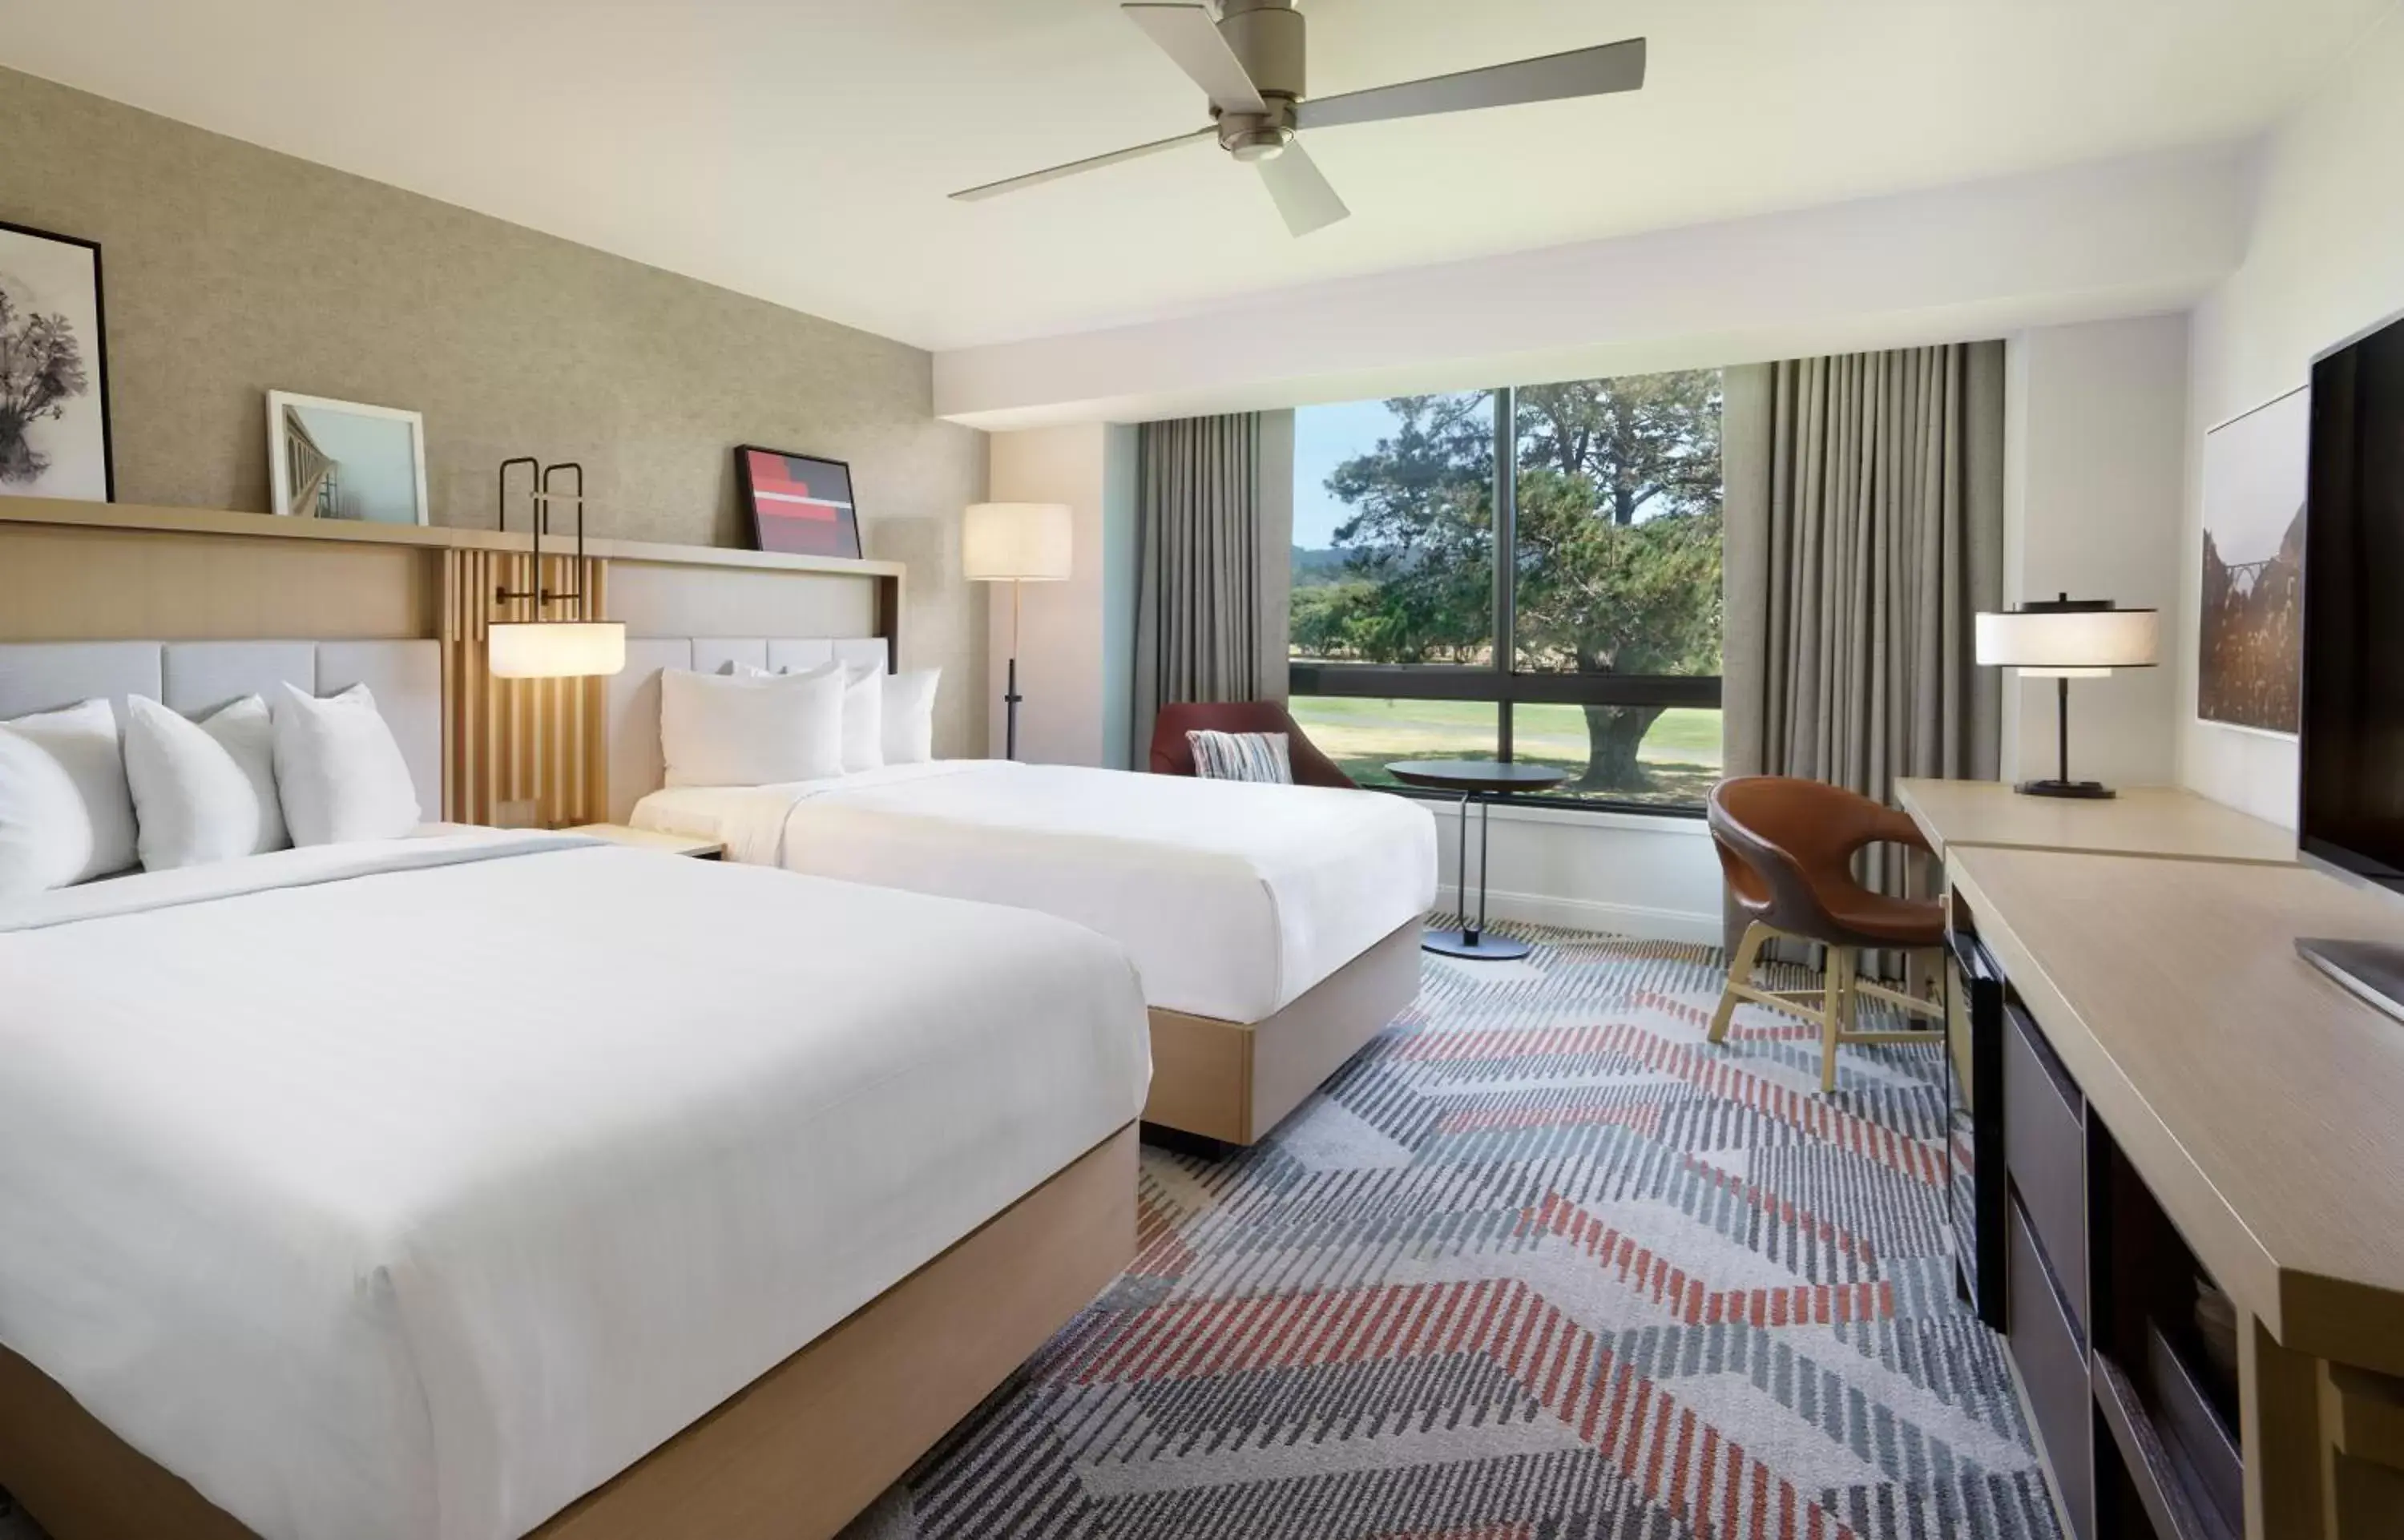 Queen Room with Two Queen Beds and Golf View in Hyatt Regency Monterey Hotel and Spa